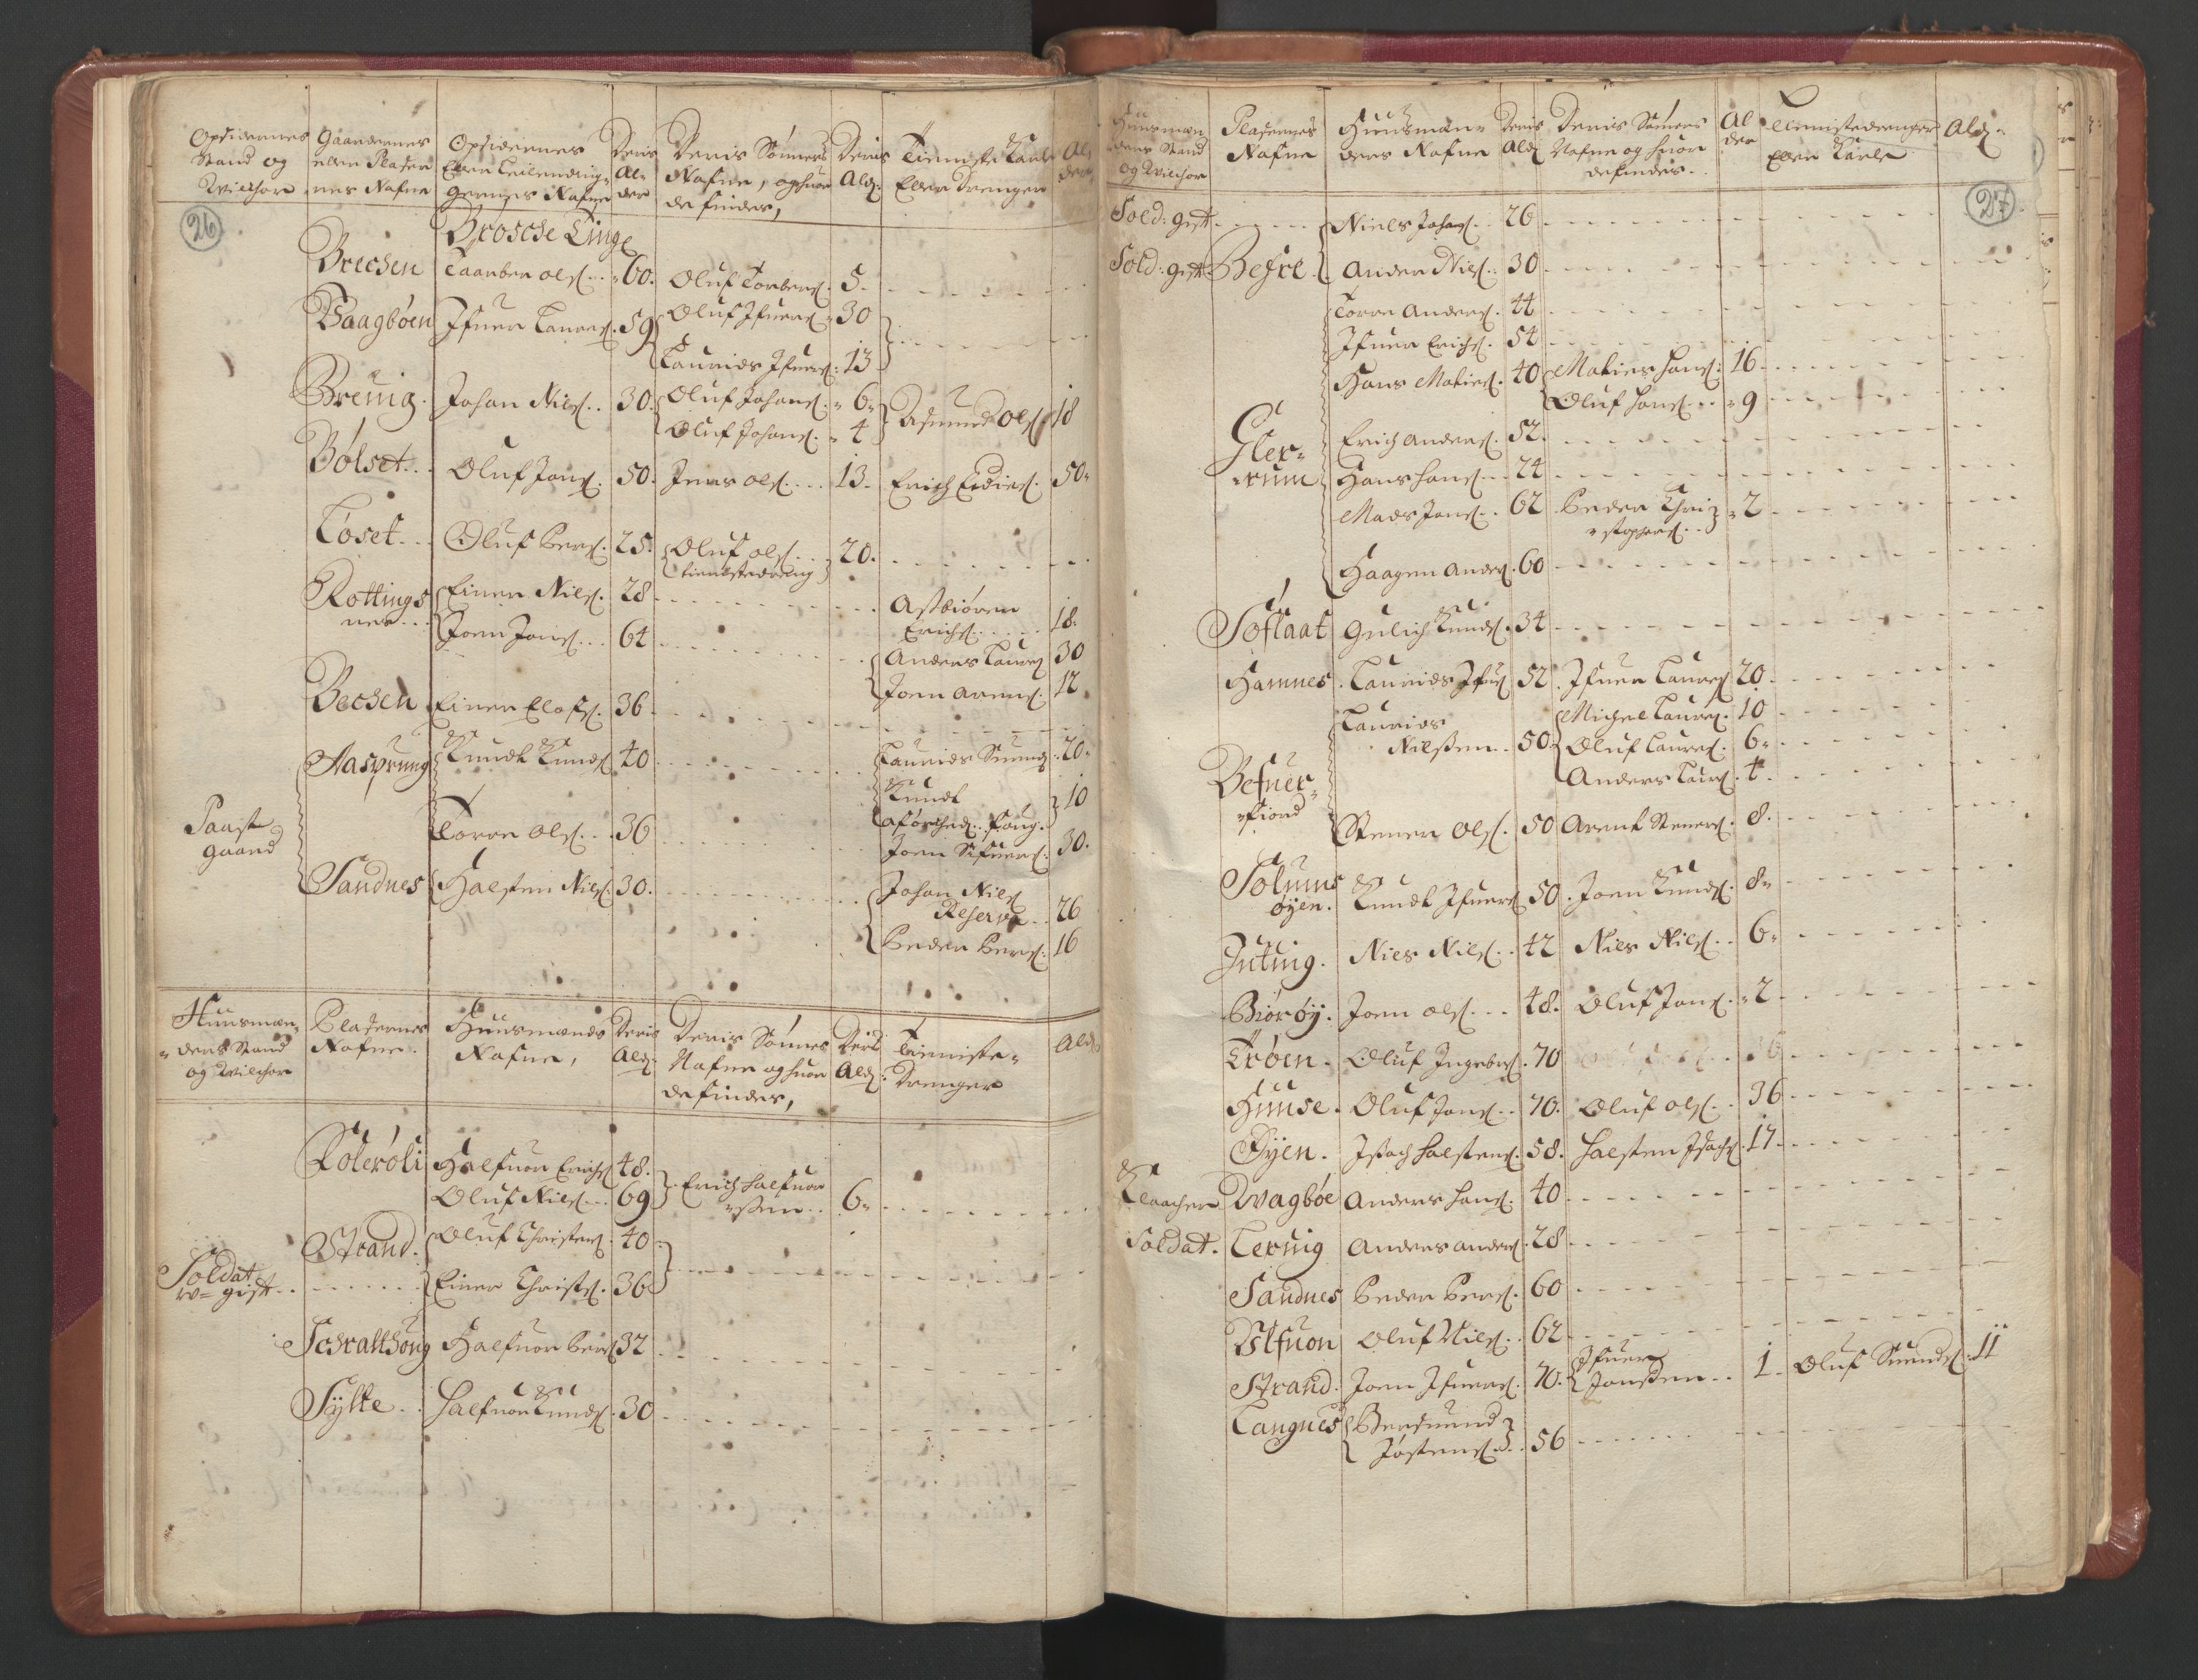 RA, Census (manntall) 1701, no. 11: Nordmøre fogderi and Romsdal fogderi, 1701, p. 26-27